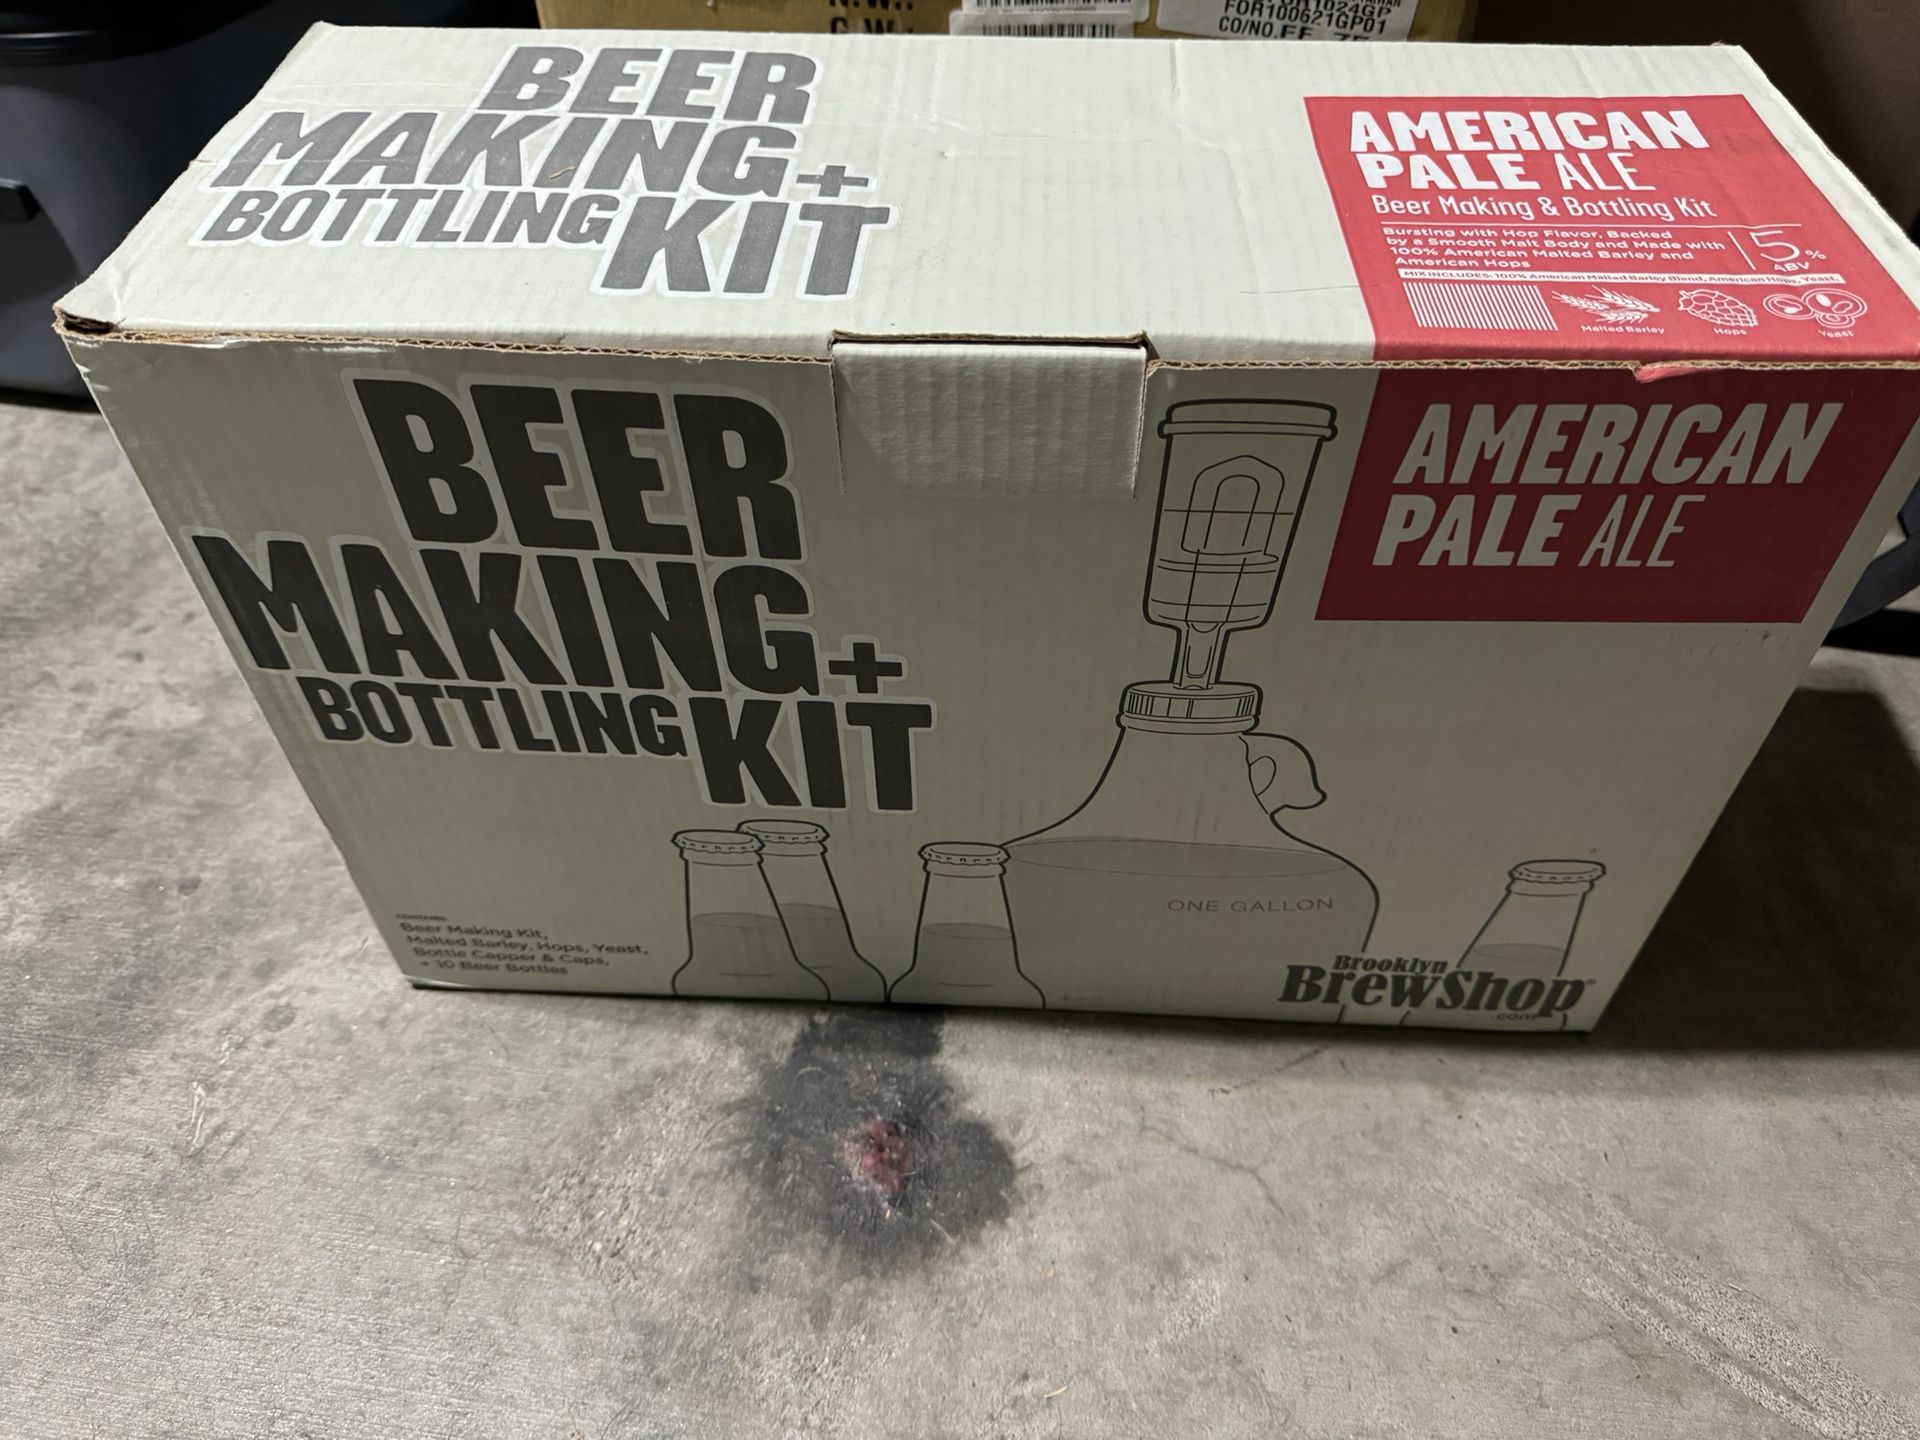 Beer Making And Bottling Kit